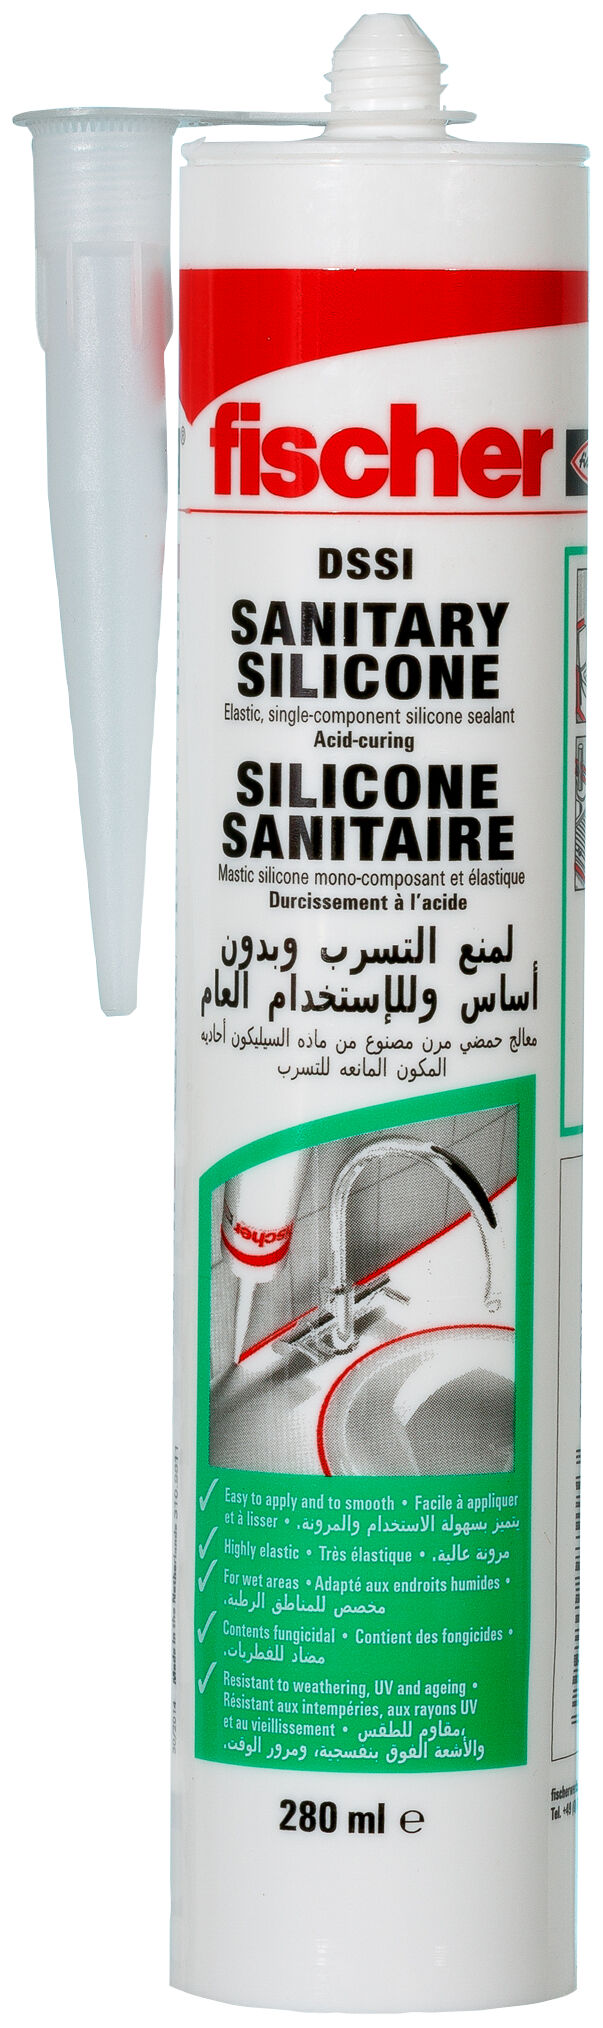 Sanitary silicone DSSI